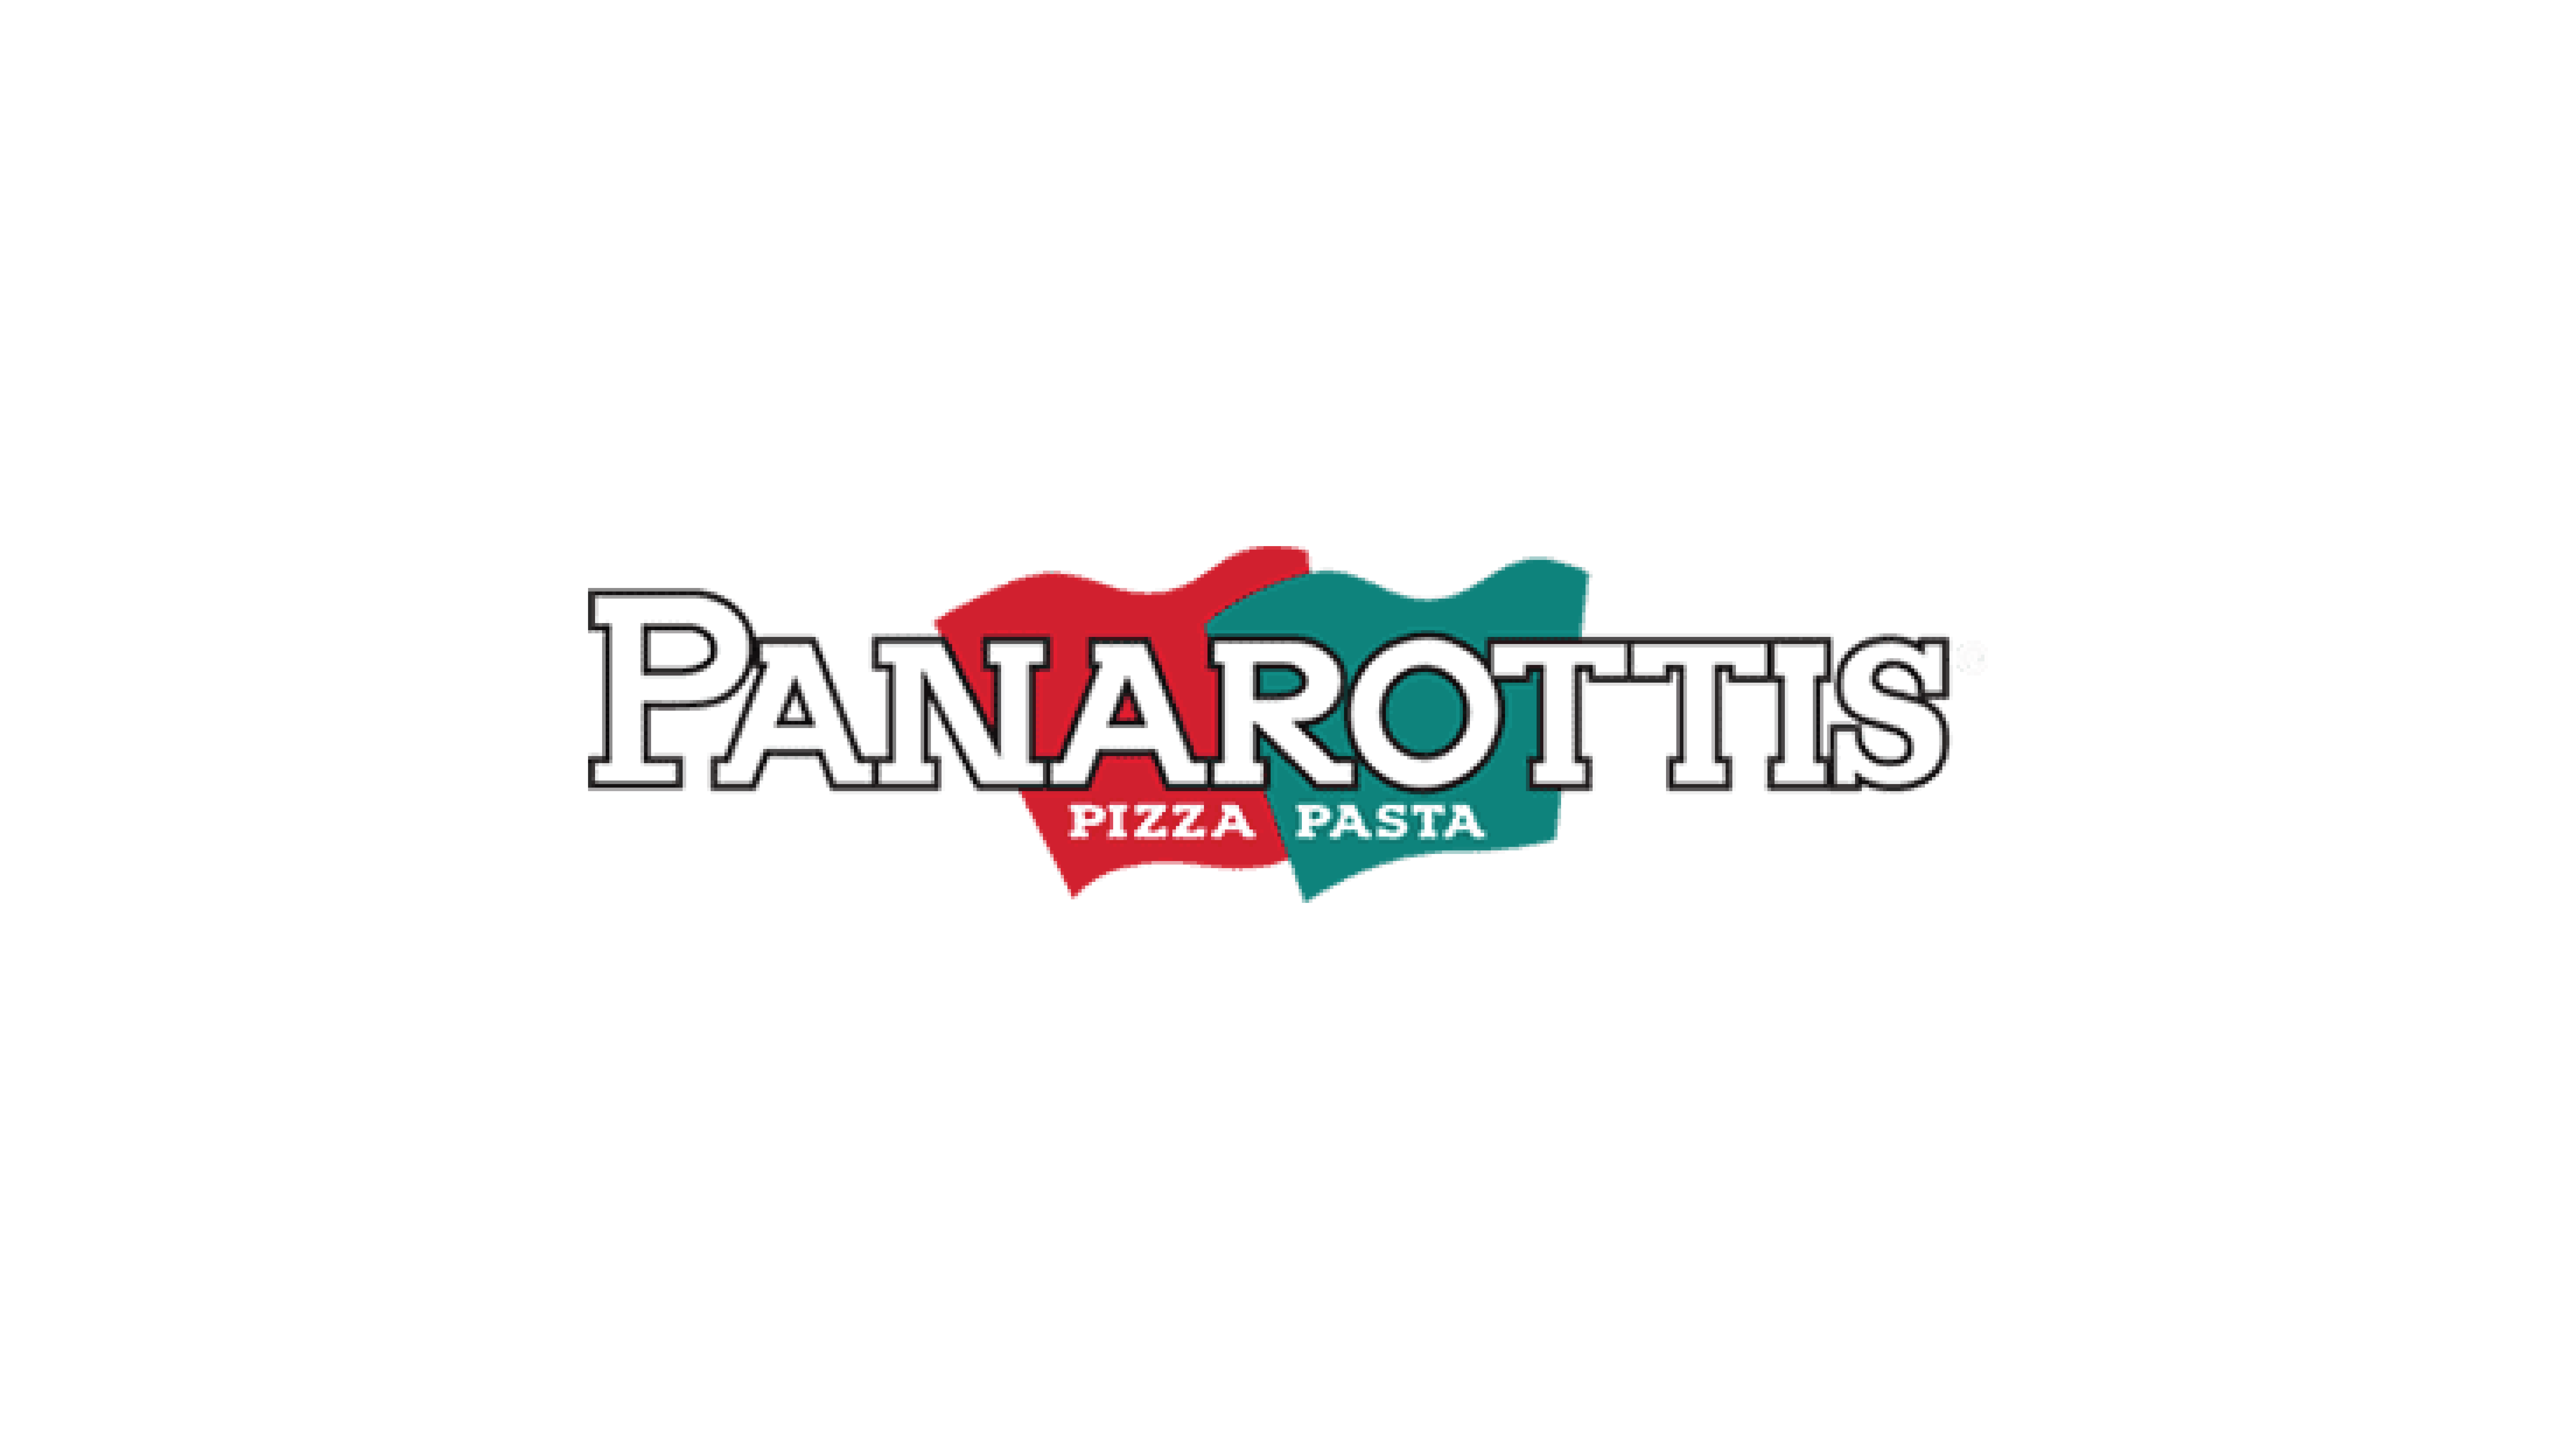 PANAROTTIS